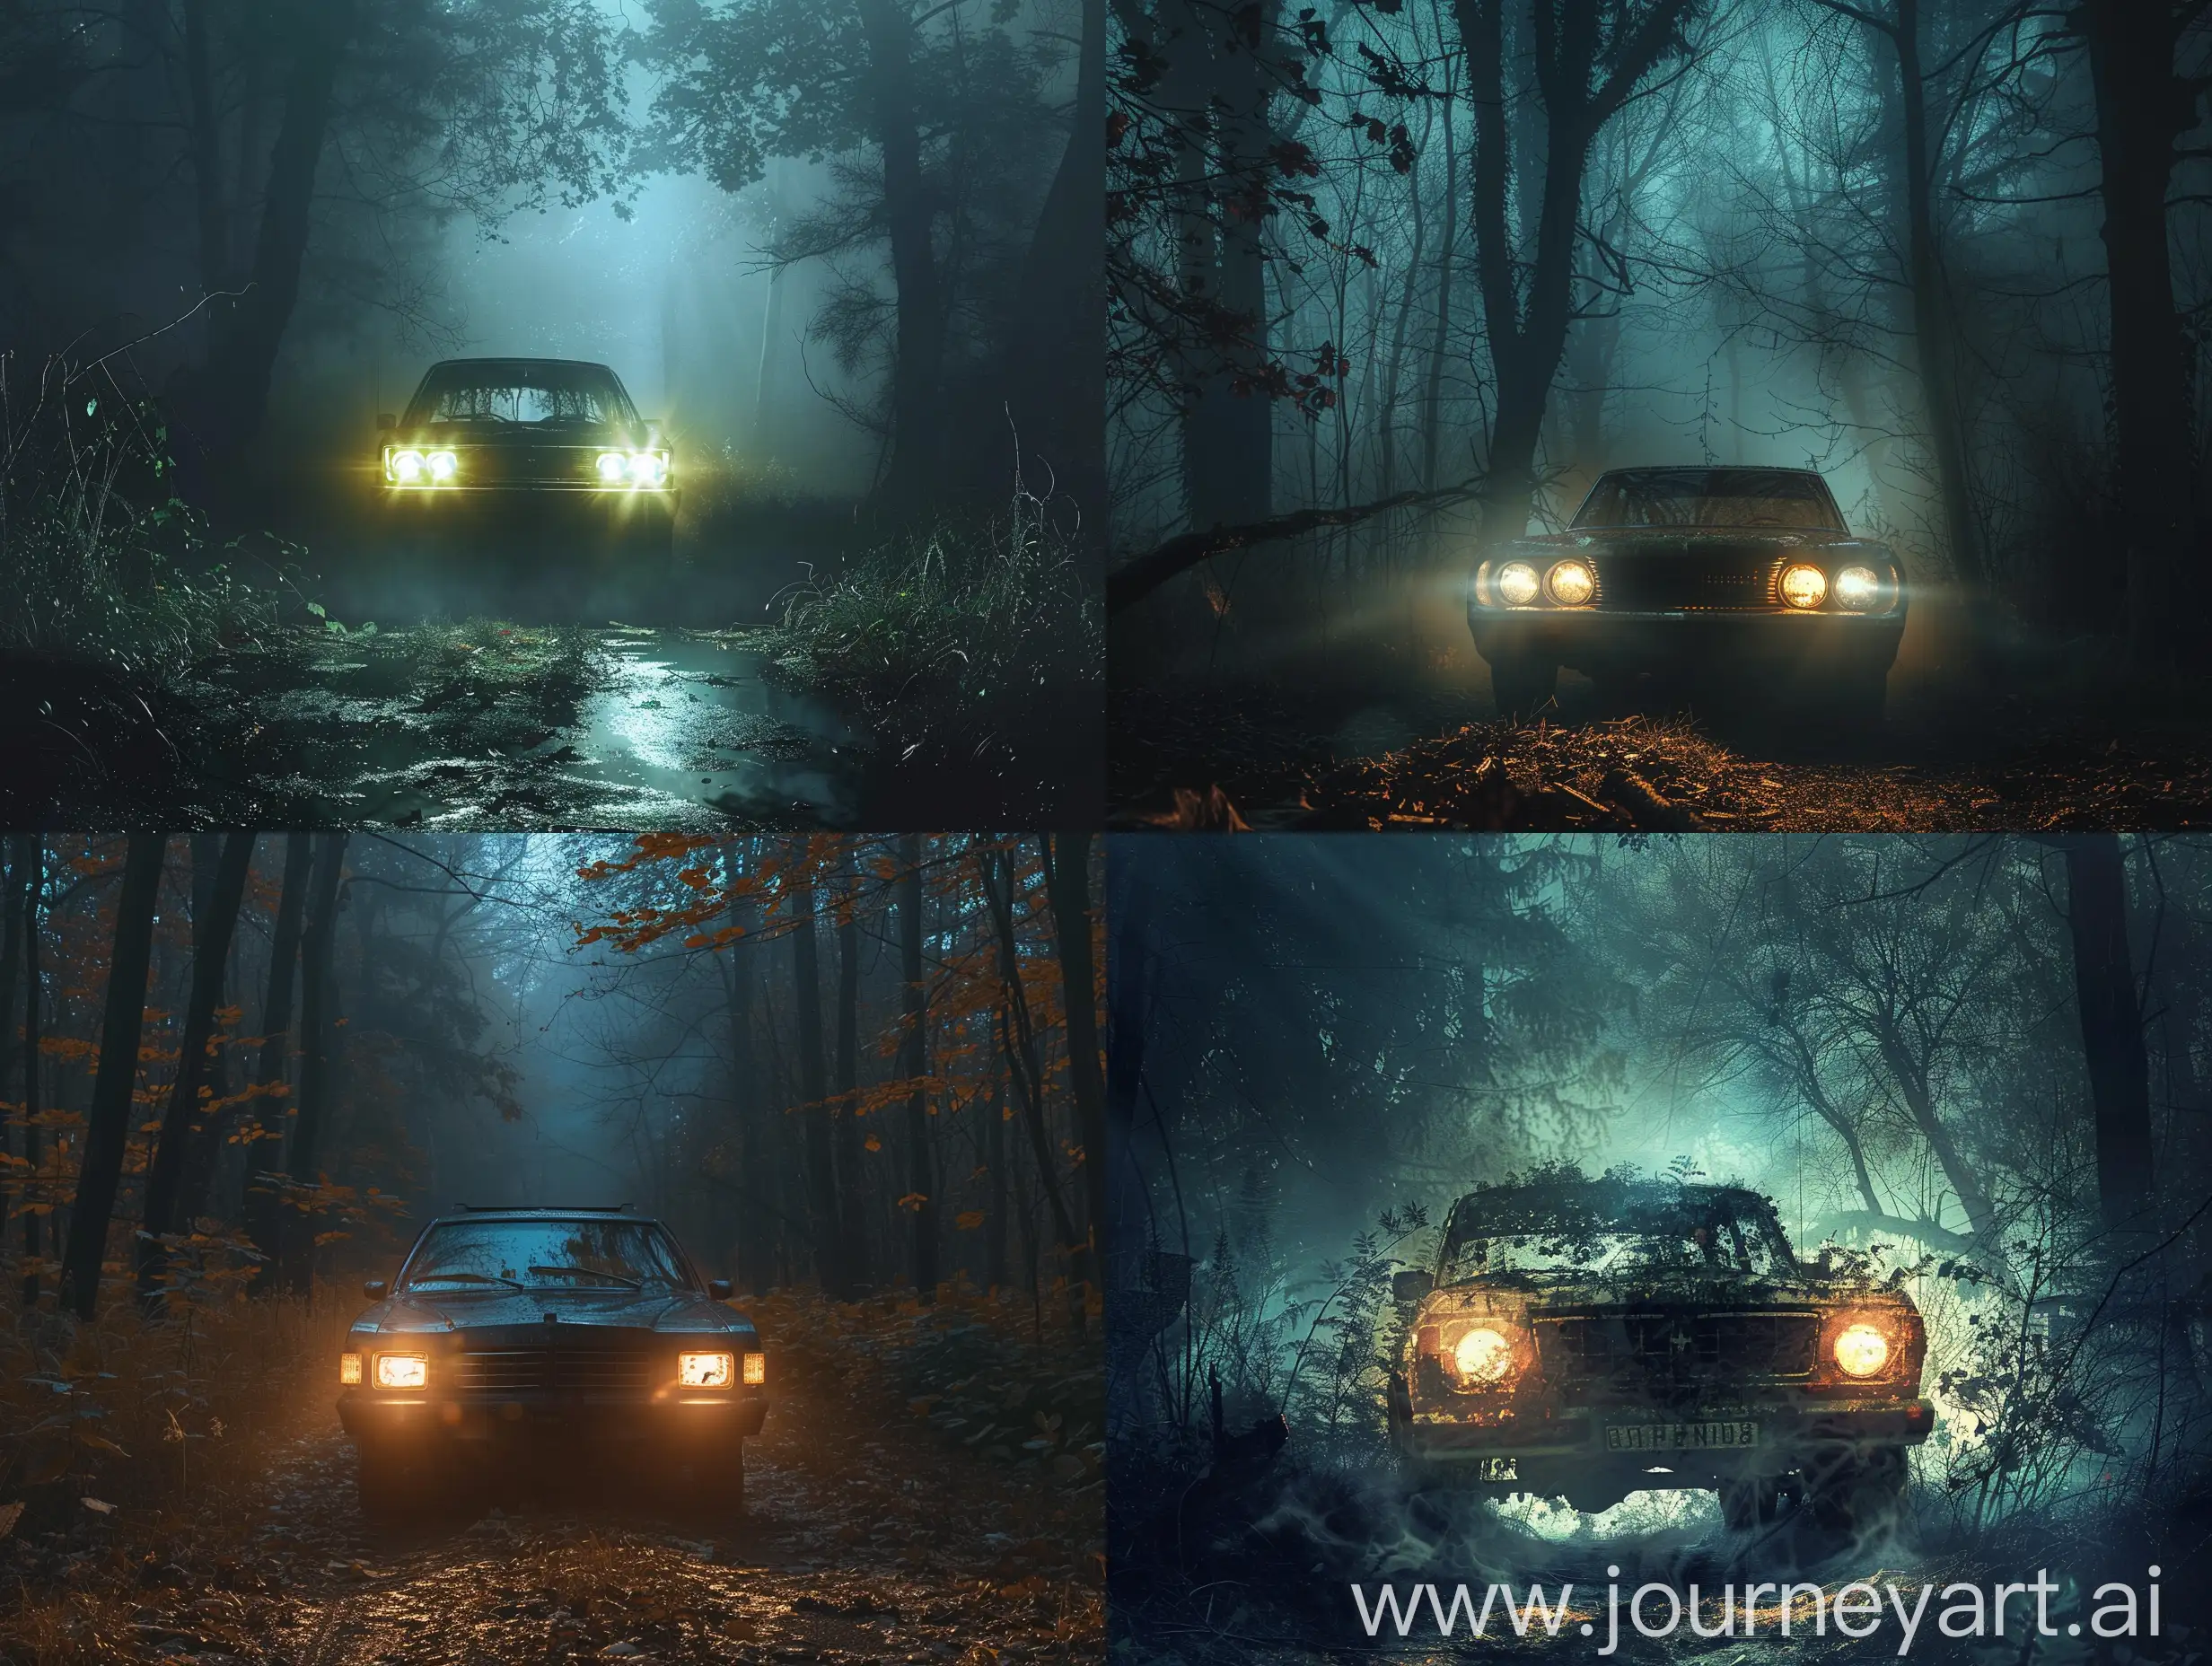 Solitary-Car-in-Dark-Forest-at-Night-Atmospheric-Horror-Scene